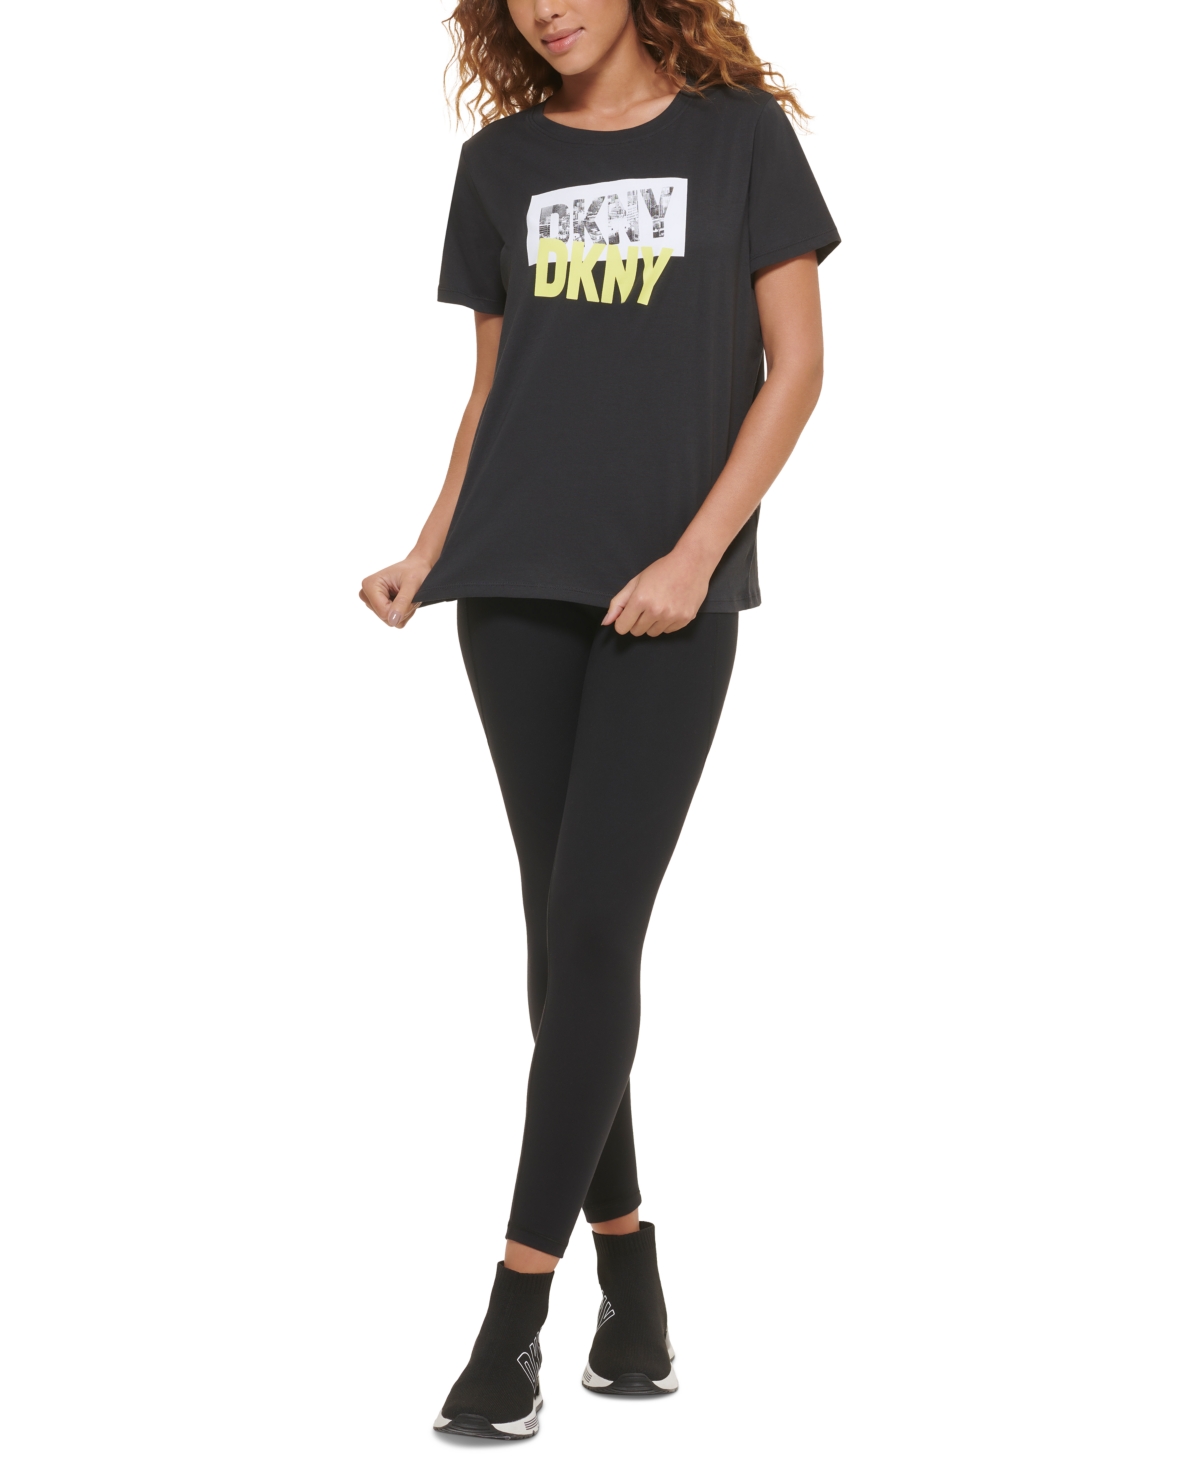 Dkny Sport Women's Performance Cotton Logo-Graphic T-Shirt